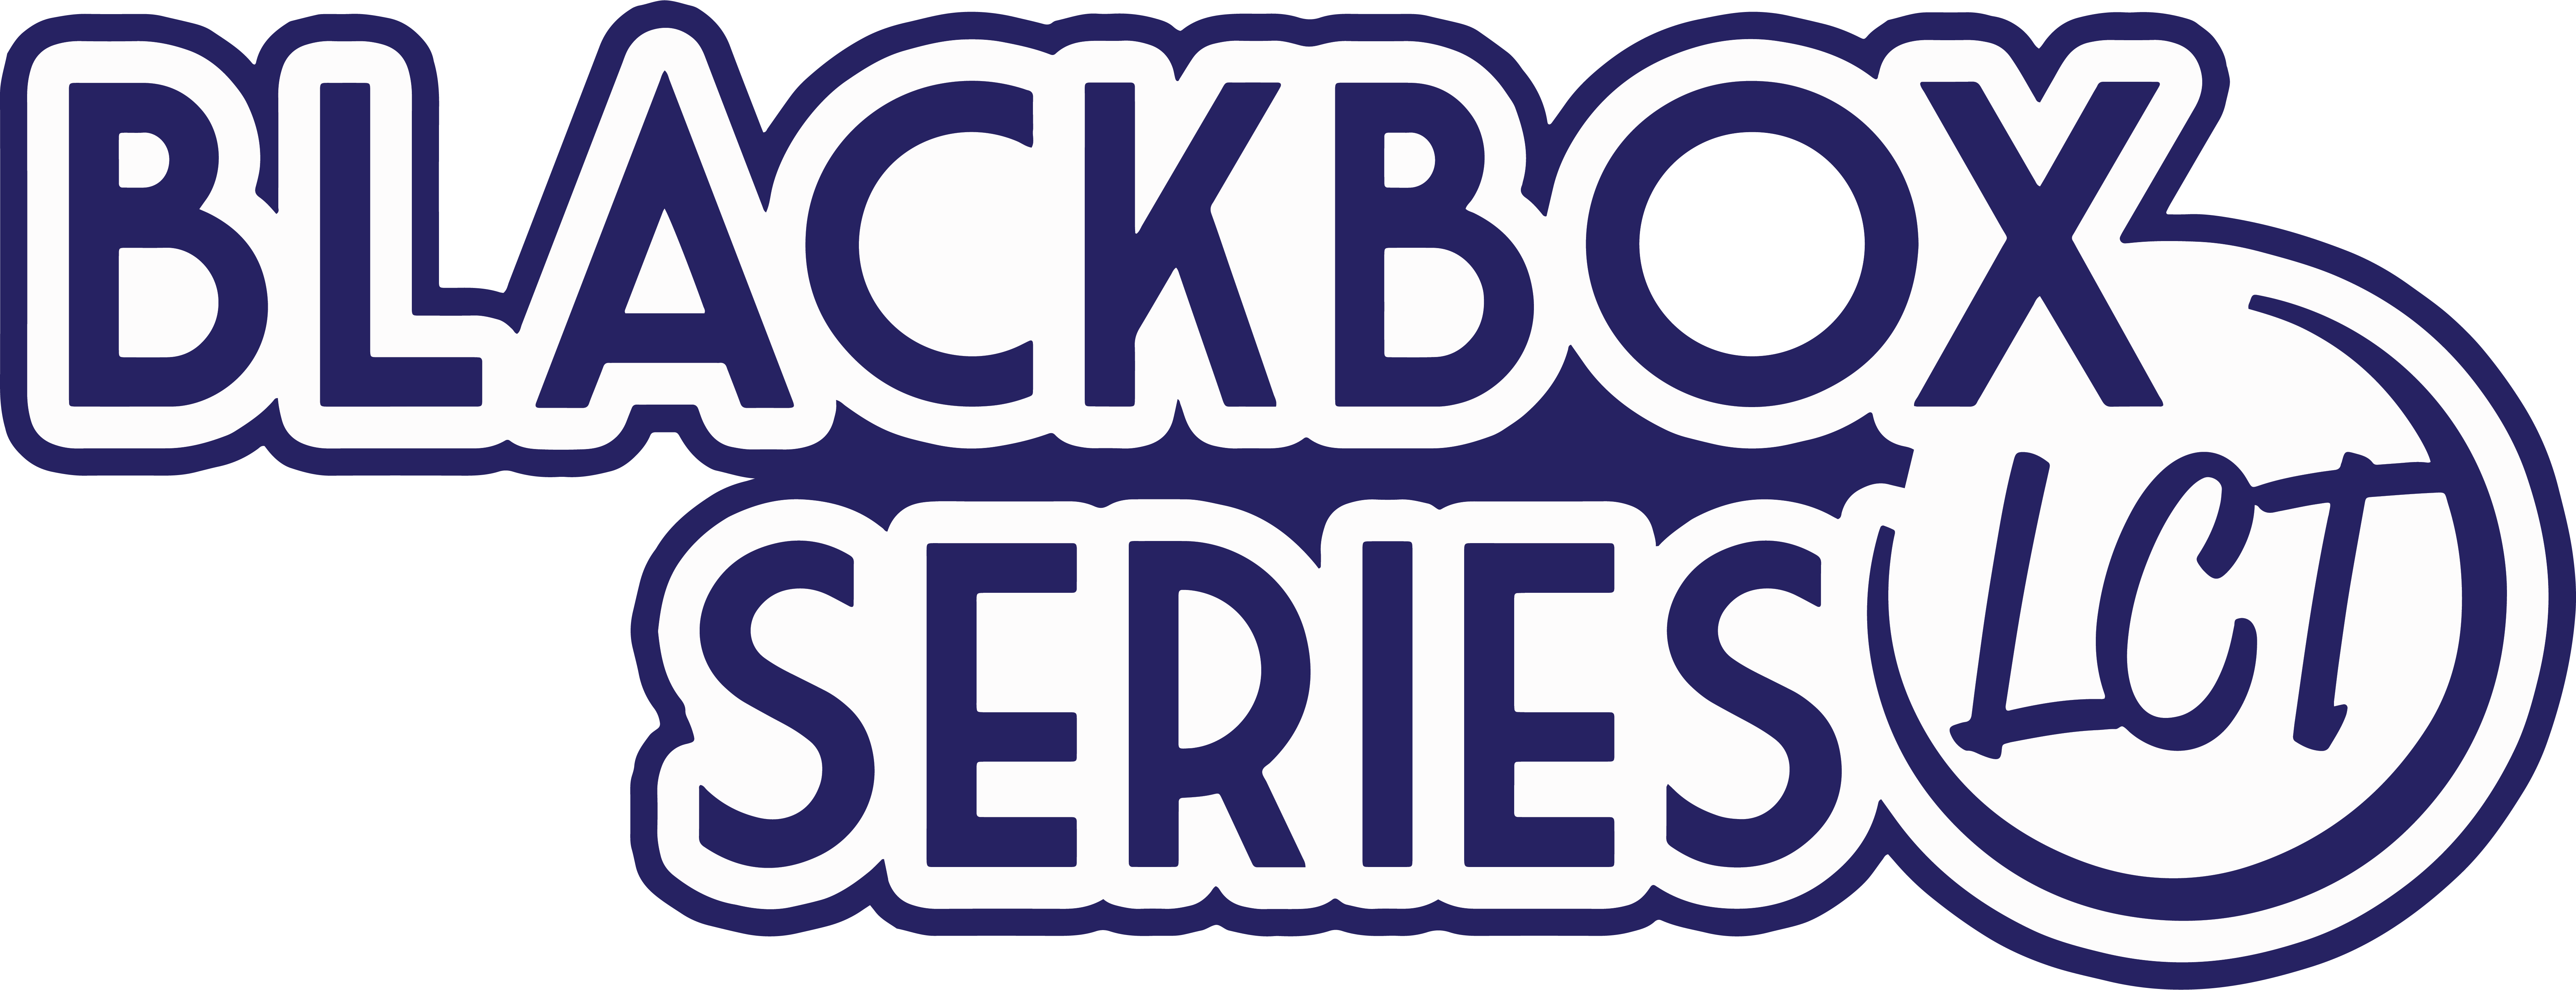 Blackbox Series